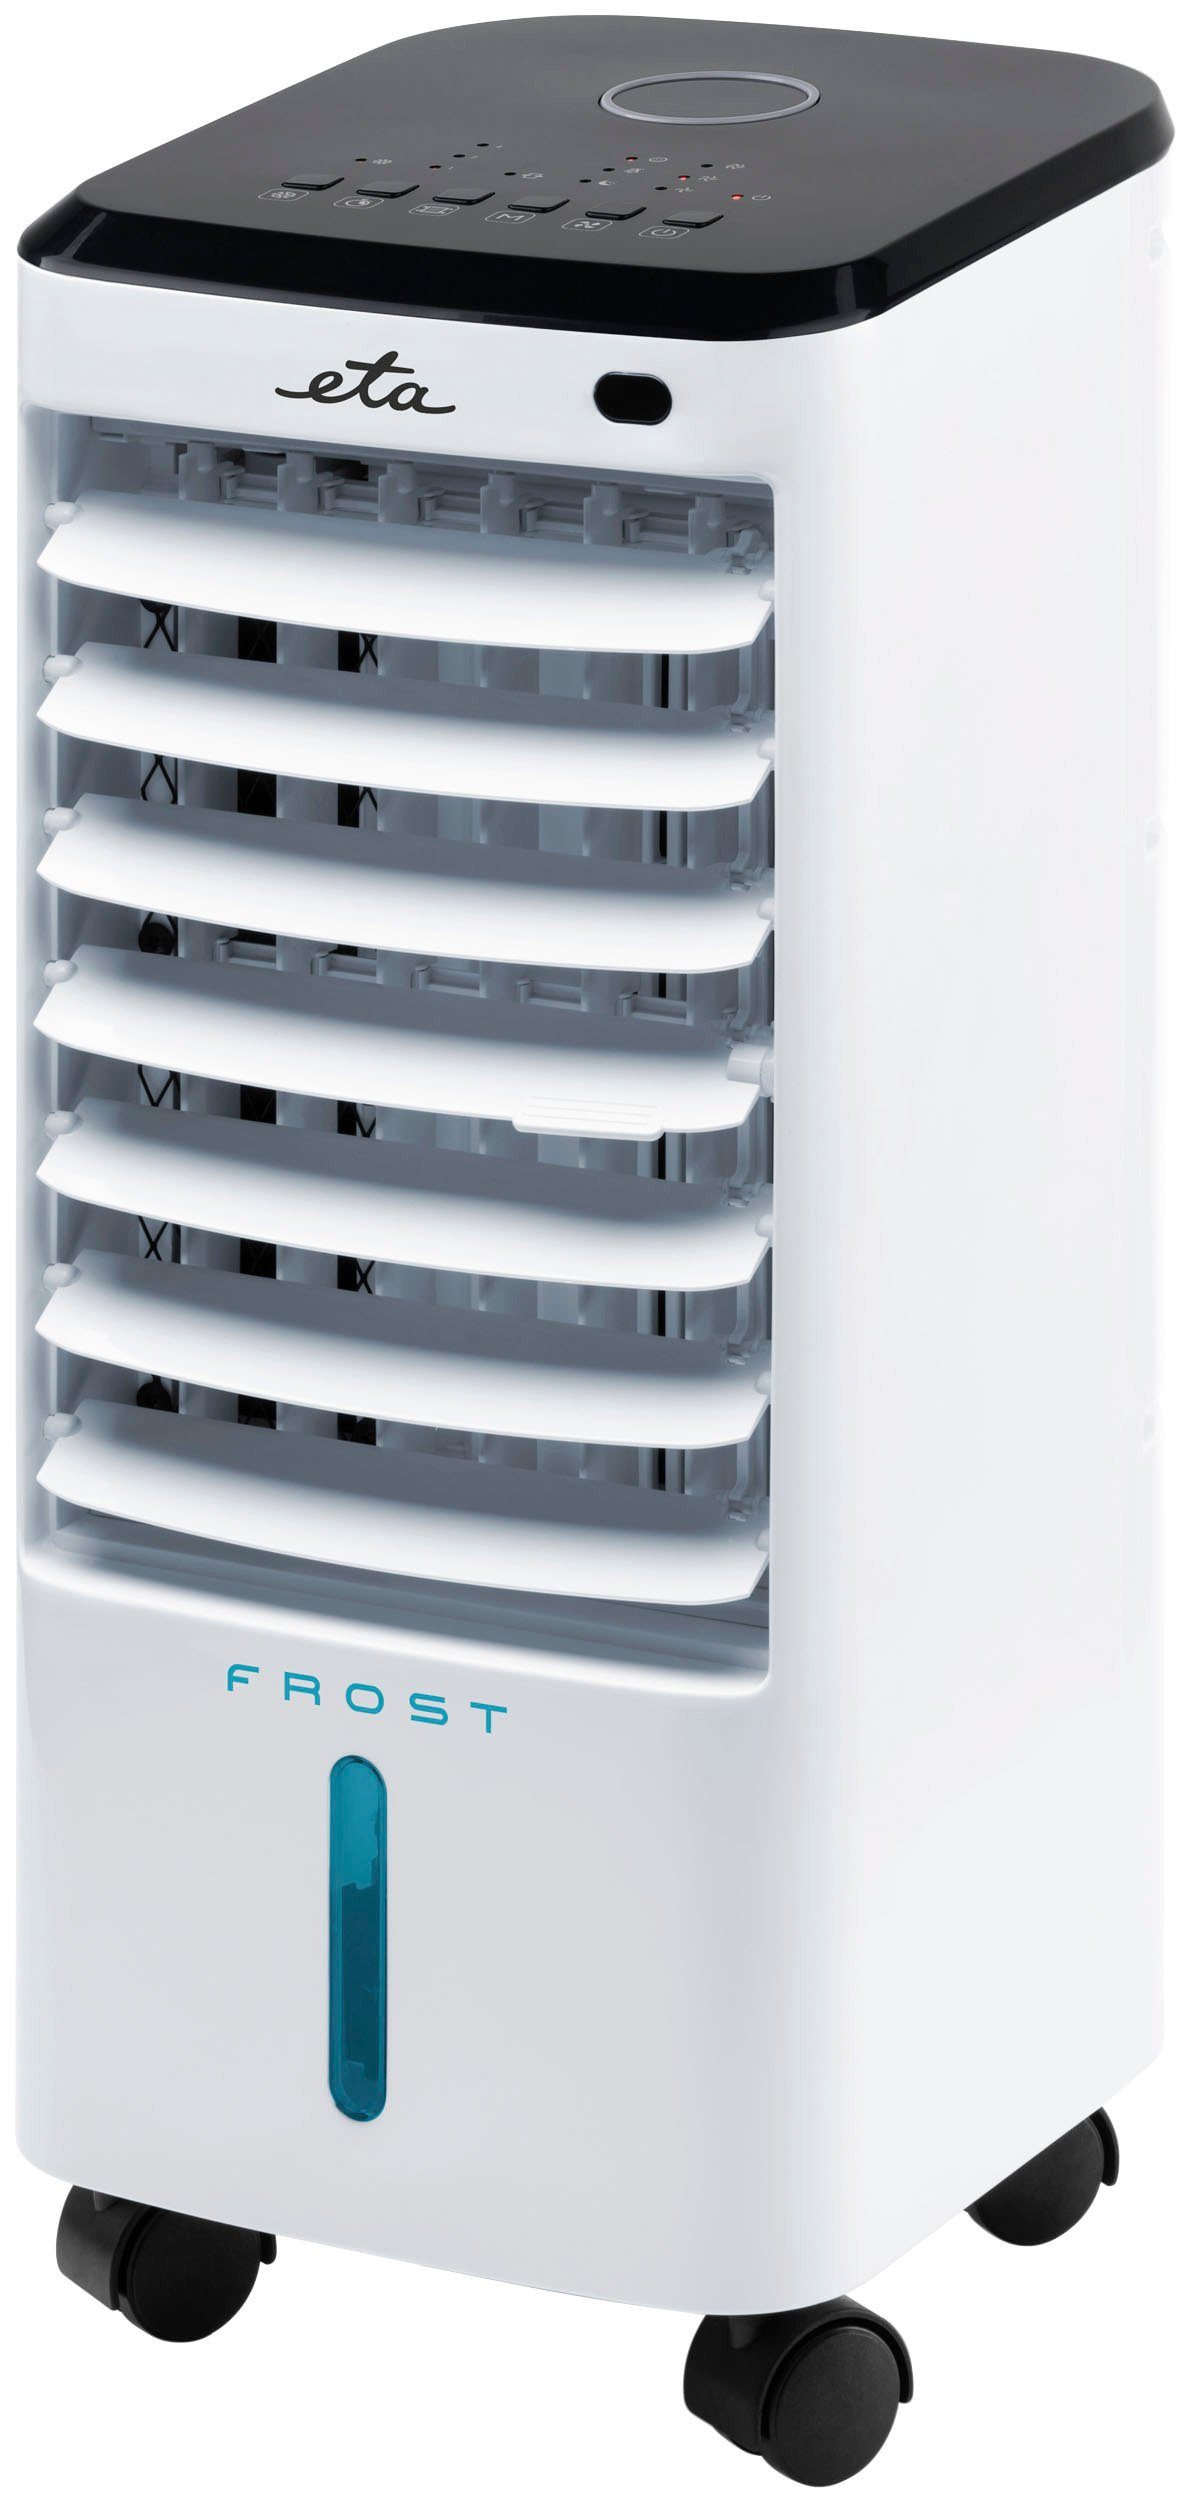 eta Ventilatorkombigerät 3-in-1 Befeuchter/Ventilator/Kühler Luftkühler, l 3,5 "Frost", Fassungsvermögen